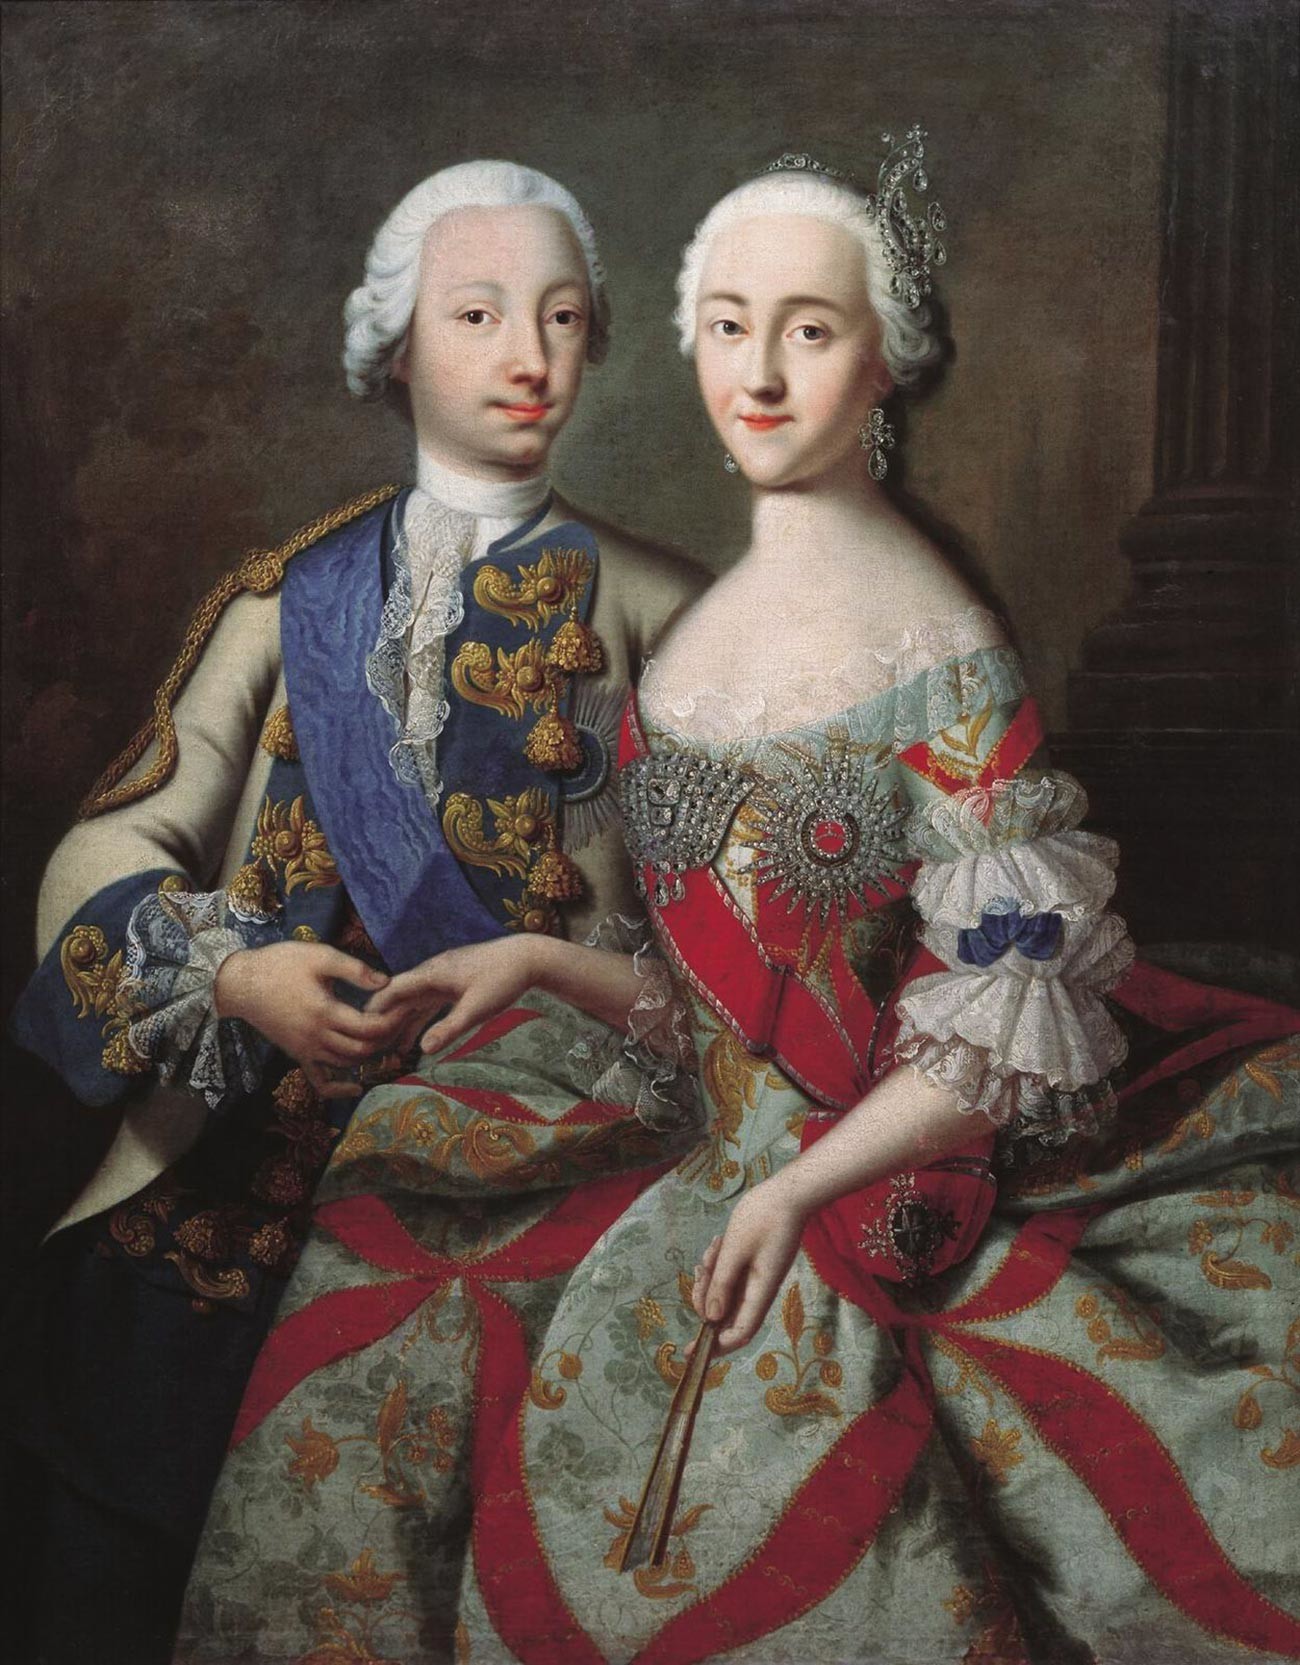 Pedro e Catarina (antes de Pedro se tornar imperador).
